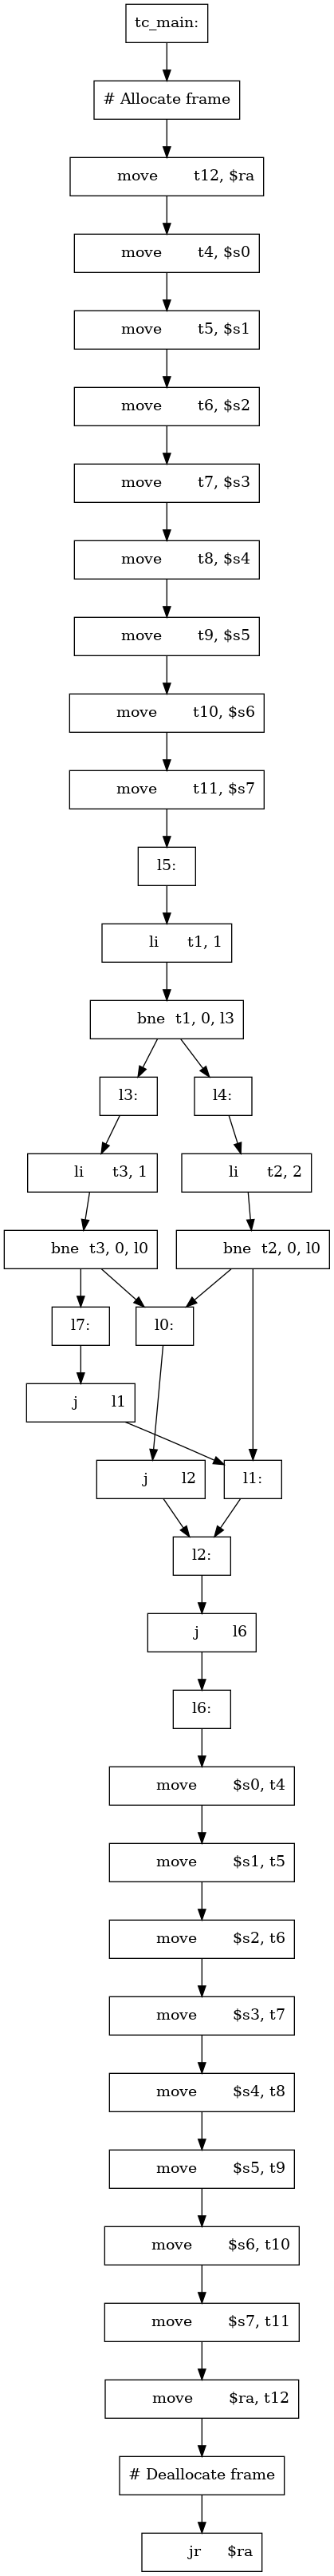 /* Graph Visualization */
digraph "ors.main._main.flow.gv" {
  node [shape=box];
  "0" [label="tc_main:"]
  "1" [label="# Allocate frame"]
  "2" [label="	move	t12, $ra"]
  "3" [label="	move	t4, $s0"]
  "4" [label="	move	t5, $s1"]
  "5" [label="	move	t6, $s2"]
  "6" [label="	move	t7, $s3"]
  "7" [label="	move	t8, $s4"]
  "8" [label="	move	t9, $s5"]
  "9" [label="	move	t10, $s6"]
  "10" [label="	move	t11, $s7"]
  "11" [label="l5:"]
  "12" [label="	li	t1, 1"]
  "13" [label="	bne	t1, 0, l3"]
  "14" [label="l4:"]
  "15" [label="	li	t2, 2"]
  "16" [label="	bne	t2, 0, l0"]
  "17" [label="l1:"]
  "18" [label="l2:"]
  "19" [label="	j	l6"]
  "20" [label="l0:"]
  "21" [label="	j	l2"]
  "22" [label="l3:"]
  "23" [label="	li	t3, 1"]
  "24" [label="	bne	t3, 0, l0"]
  "25" [label="l7:"]
  "26" [label="	j	l1"]
  "27" [label="l6:"]
  "28" [label="	move	$s0, t4"]
  "29" [label="	move	$s1, t5"]
  "30" [label="	move	$s2, t6"]
  "31" [label="	move	$s3, t7"]
  "32" [label="	move	$s4, t8"]
  "33" [label="	move	$s5, t9"]
  "34" [label="	move	$s6, t10"]
  "35" [label="	move	$s7, t11"]
  "36" [label="	move	$ra, t12"]
  "37" [label="# Deallocate frame"]
  "38" [label="	jr	$ra"]
  "0" -> "1"
  "1" -> "2"
  "2" -> "3"
  "3" -> "4"
  "4" -> "5"
  "5" -> "6"
  "6" -> "7"
  "7" -> "8"
  "8" -> "9"
  "9" -> "10"
  "10" -> "11"
  "11" -> "12"
  "12" -> "13"
  "14" -> "15"
  "15" -> "16"
  "17" -> "18"
  "18" -> "19"
  "20" -> "21"
  "22" -> "23"
  "23" -> "24"
  "25" -> "26"
  "27" -> "28"
  "28" -> "29"
  "29" -> "30"
  "30" -> "31"
  "31" -> "32"
  "32" -> "33"
  "33" -> "34"
  "34" -> "35"
  "35" -> "36"
  "36" -> "37"
  "37" -> "38"
  "13" -> "22"
  "13" -> "14"
  "16" -> "20"
  "16" -> "17"
  "19" -> "27"
  "21" -> "18"
  "24" -> "20"
  "24" -> "25"
  "26" -> "17"
}